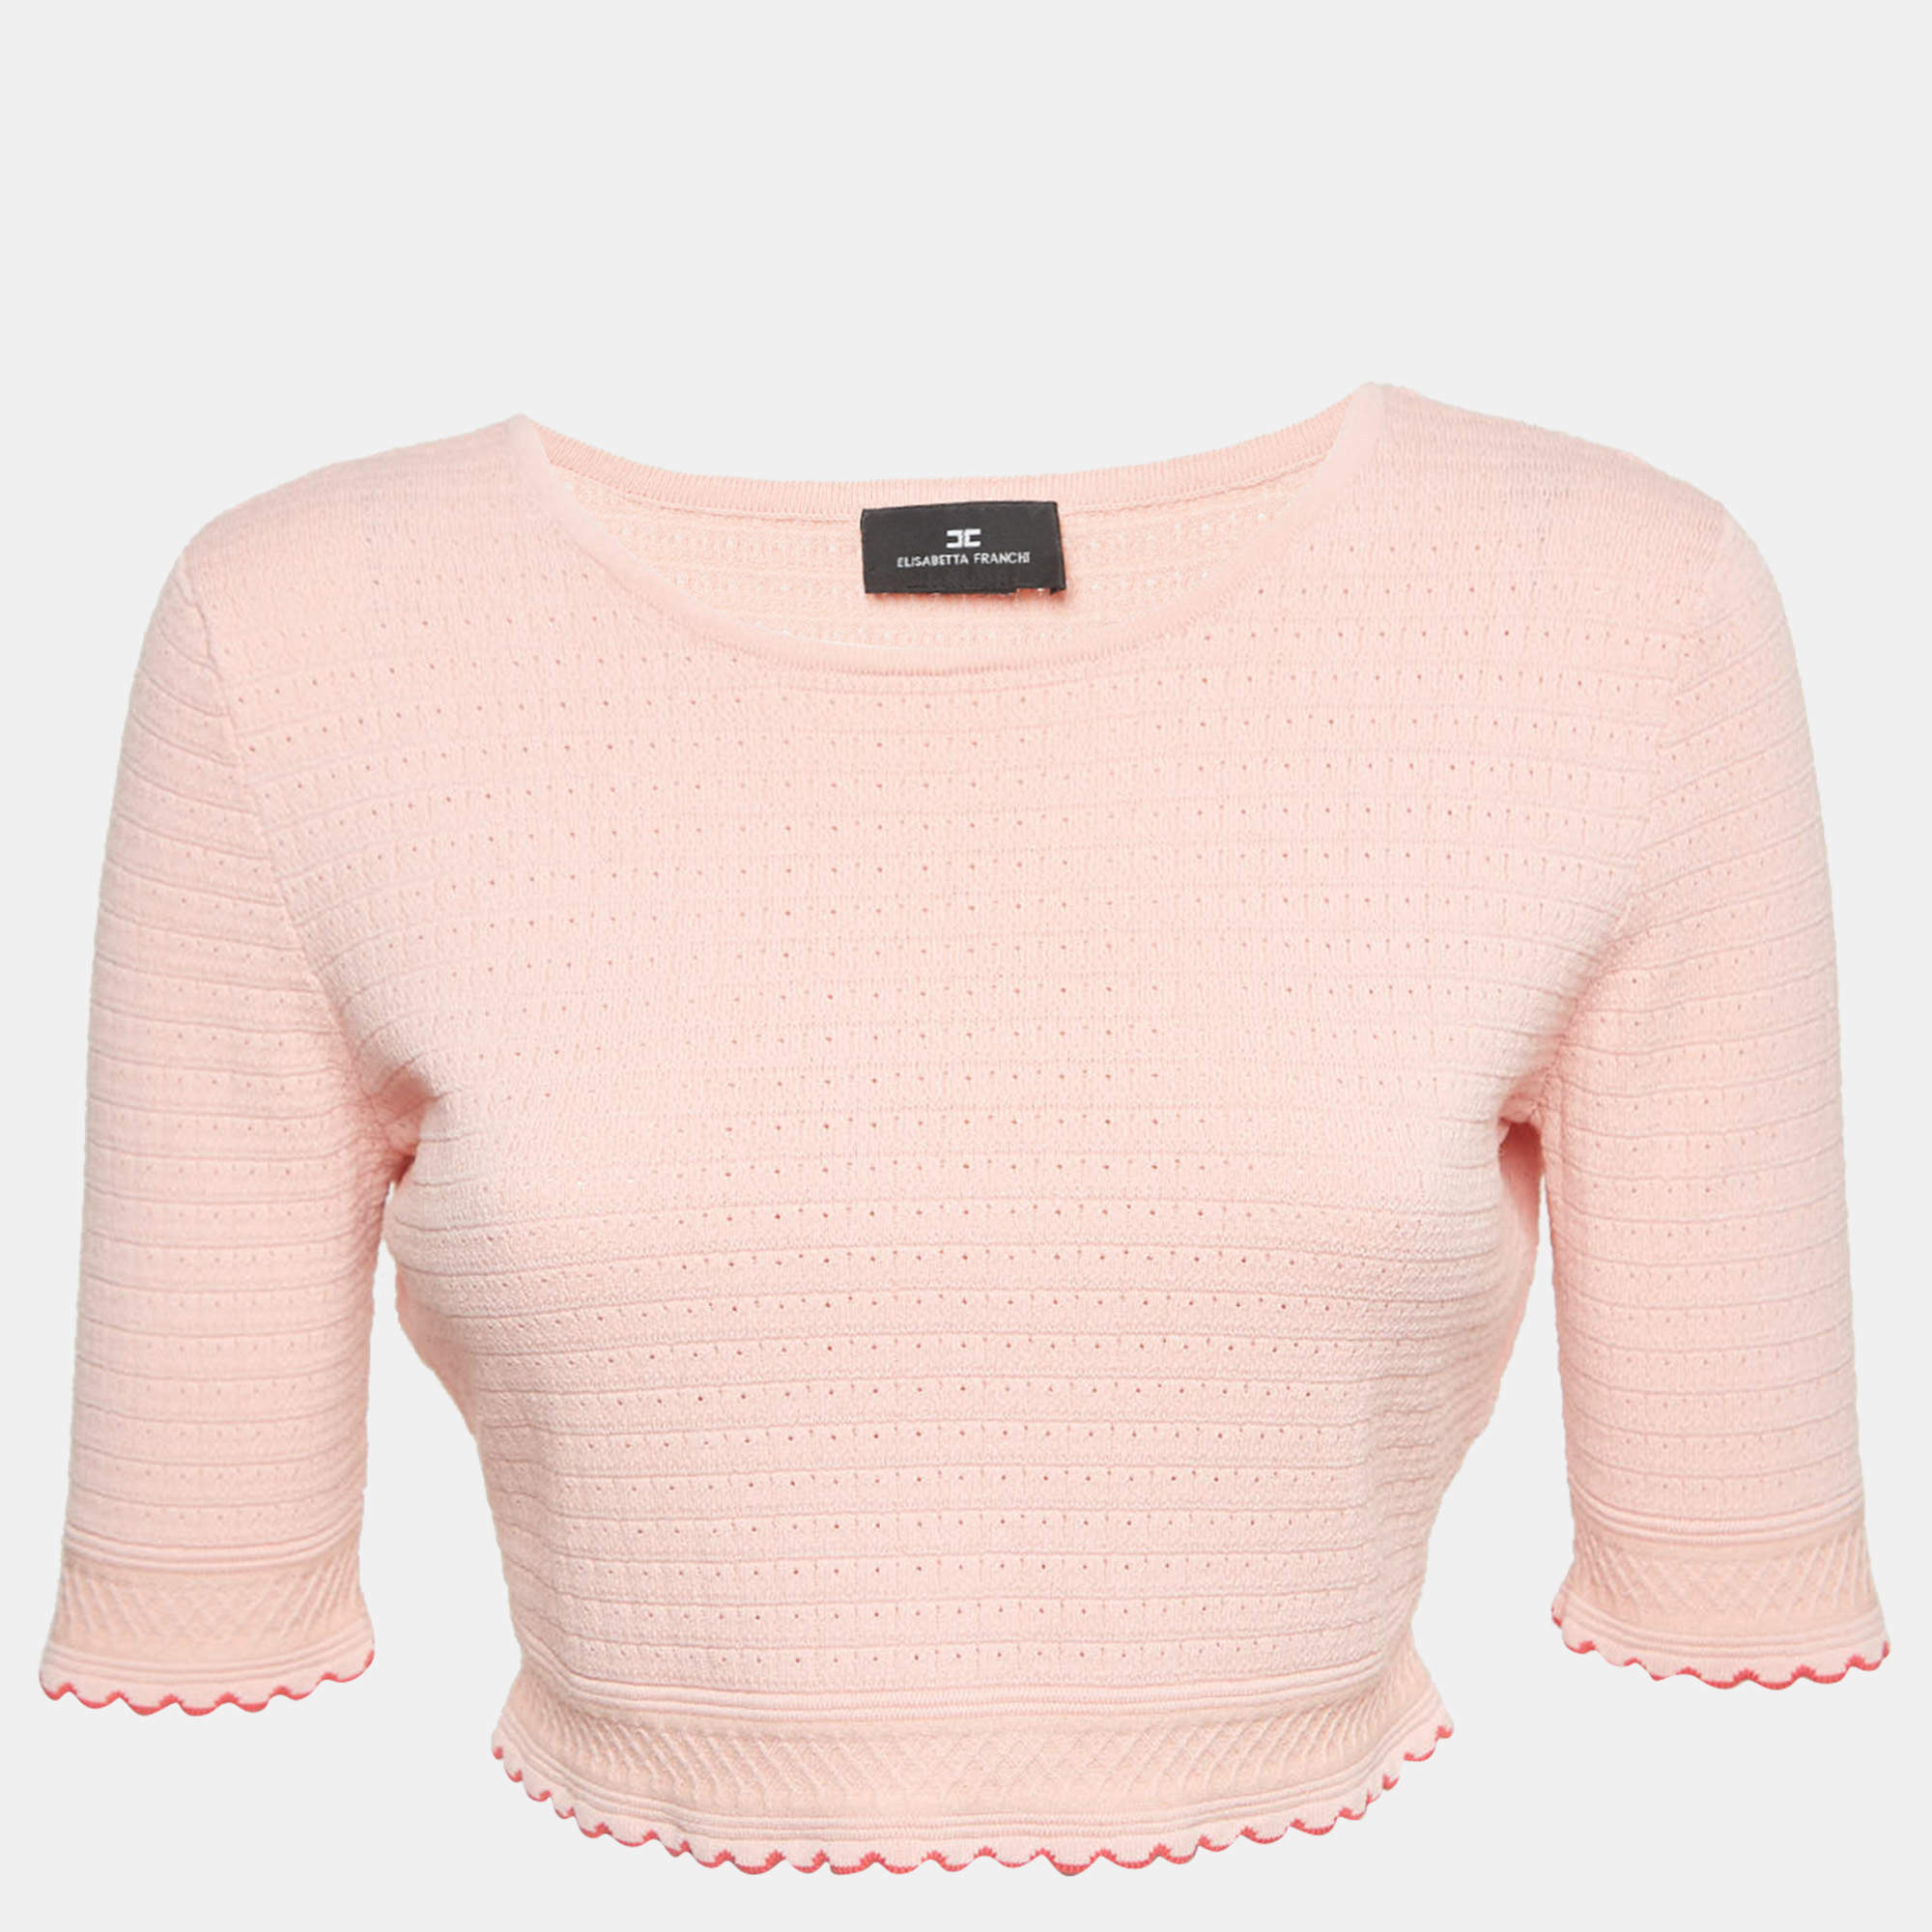 Elisabetta Franchi Pink Textured Knit Sweater Top L